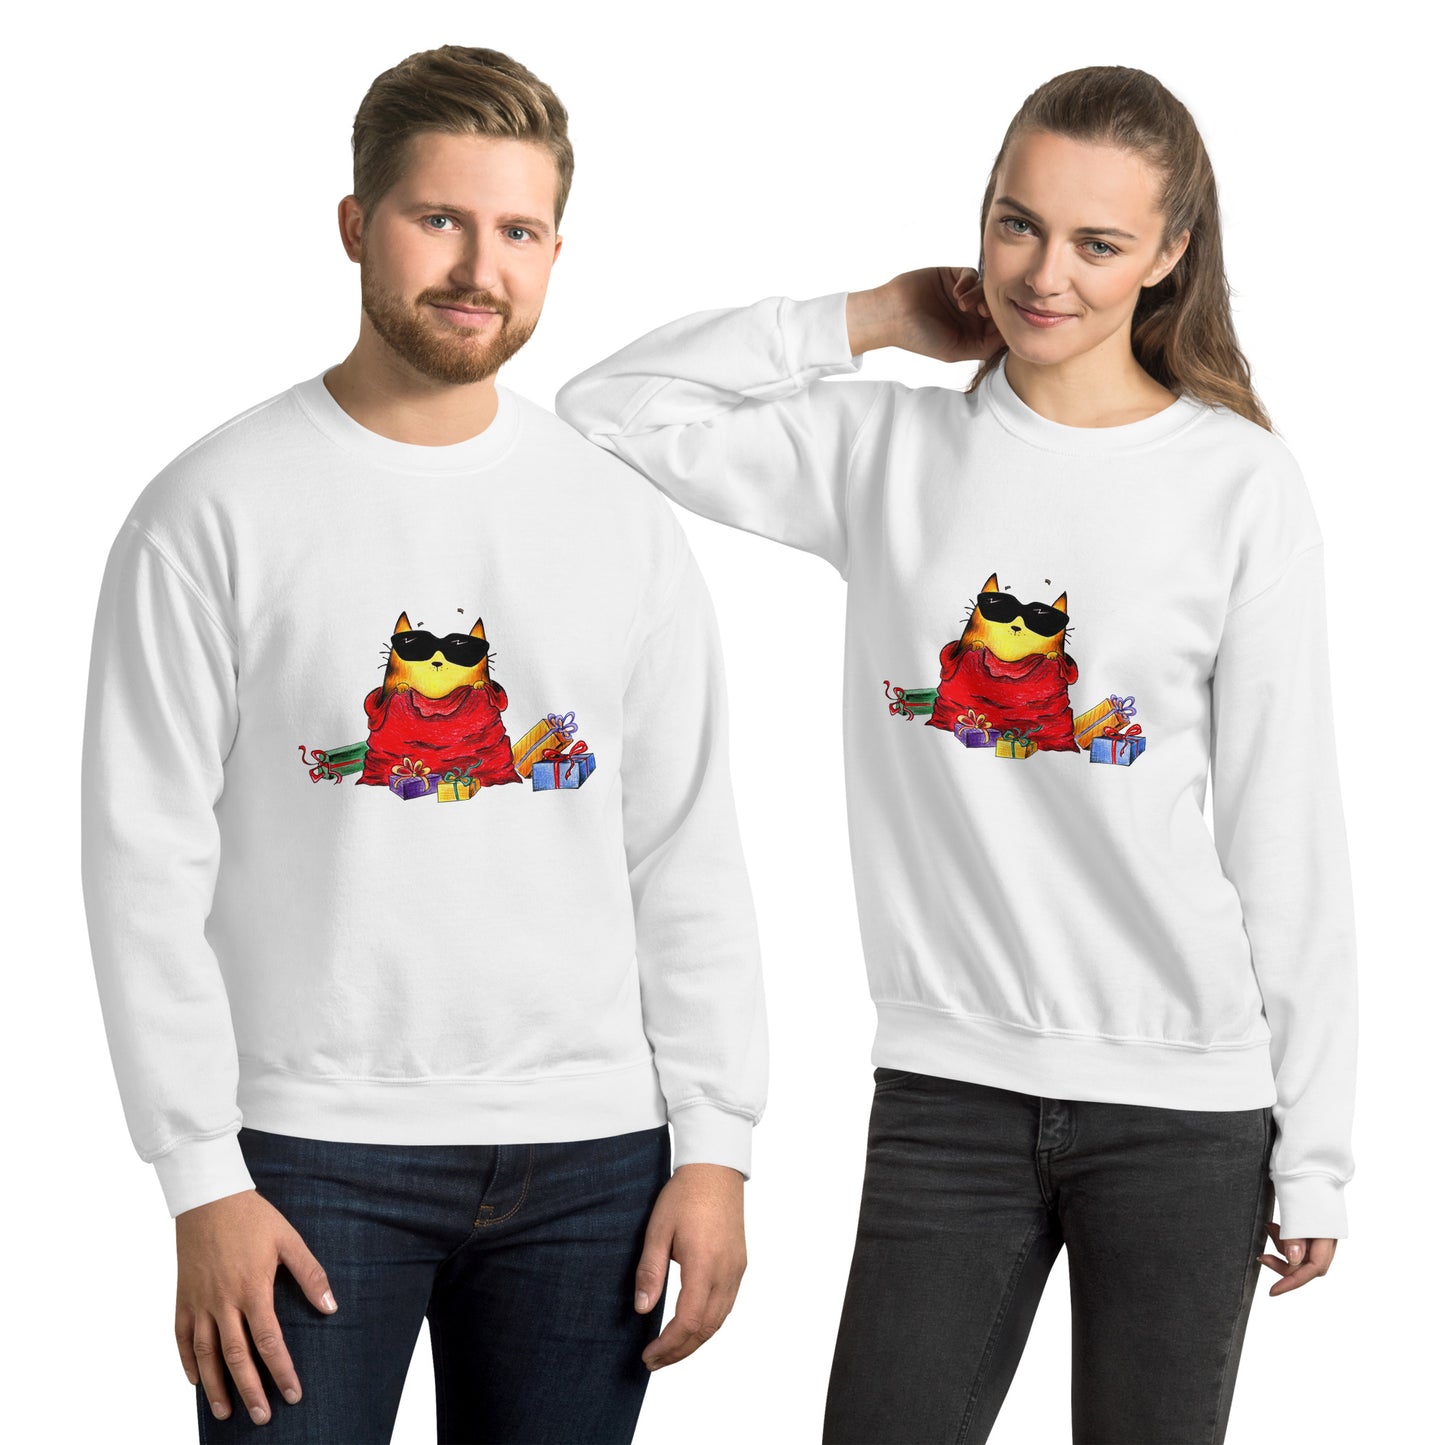 Unisex Sweatshirt "Christmas Cat with Gifts"